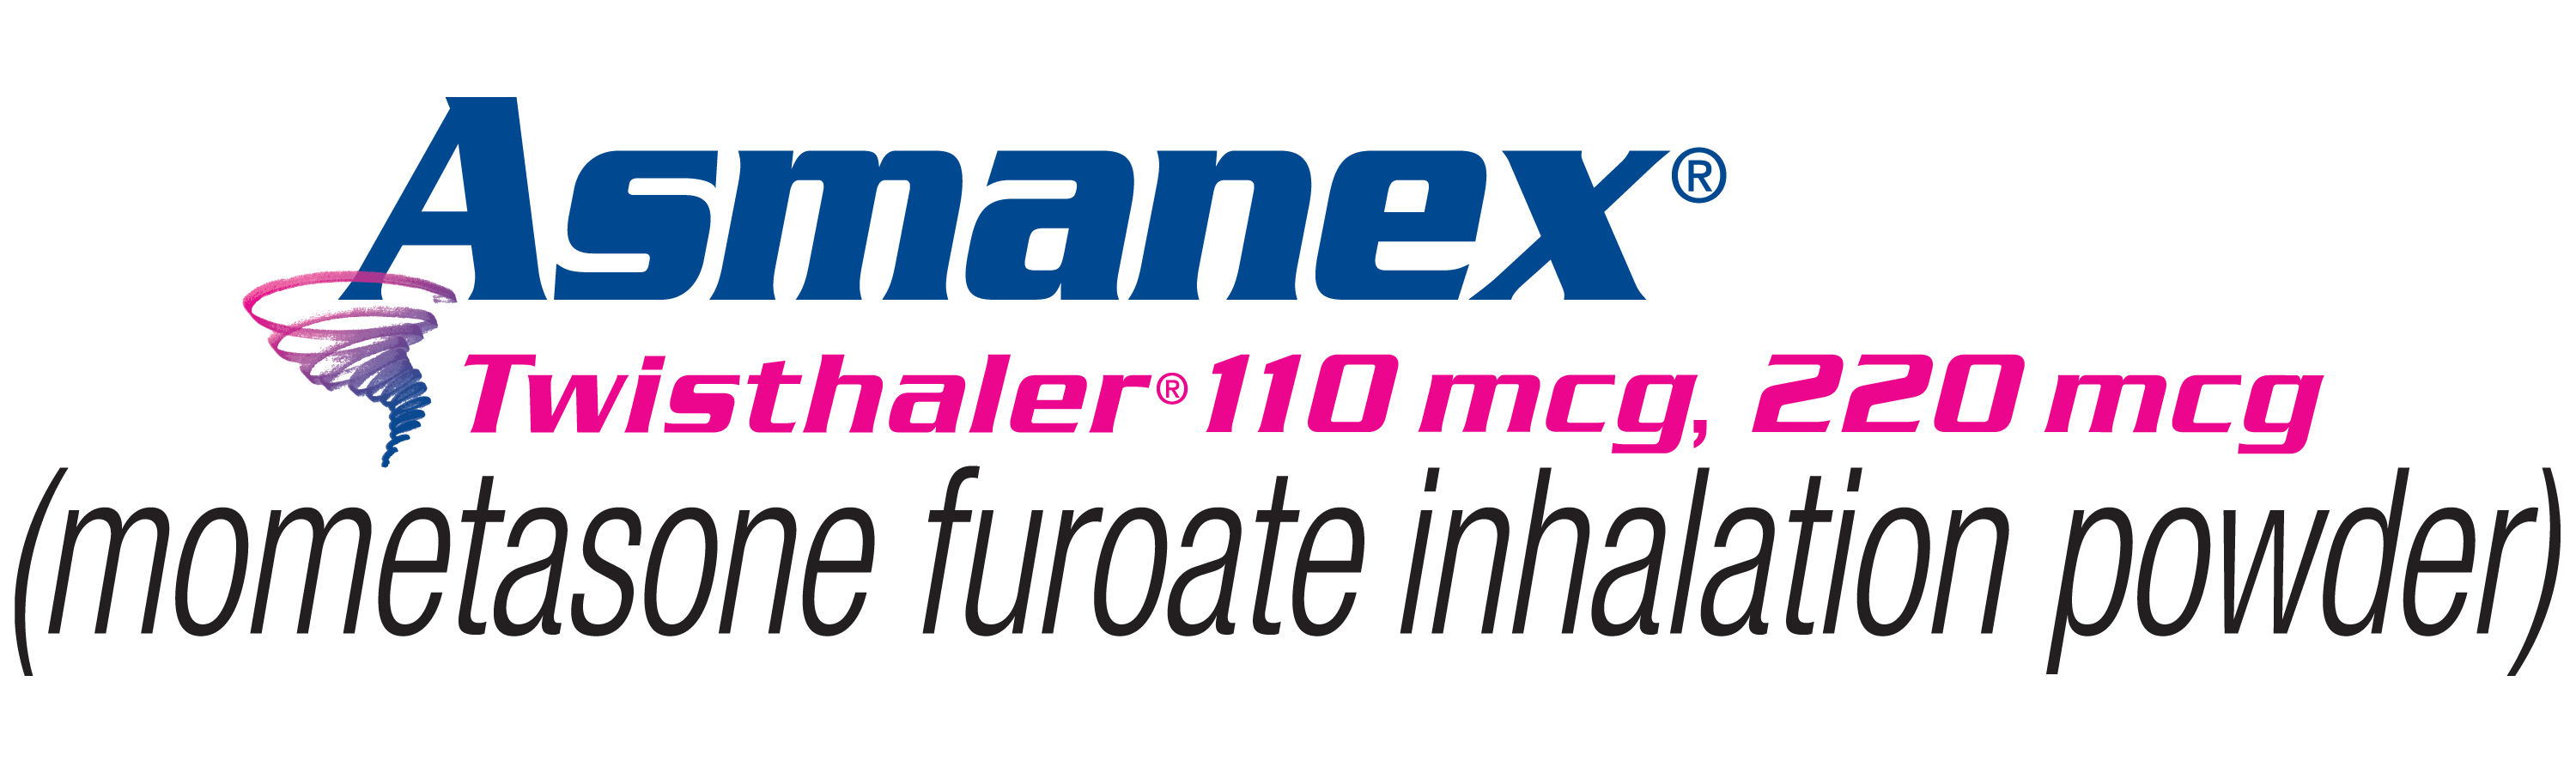 ASMANEX® HFA (mometasone furoate) Inhalation Aerosol 50 mcg, 100 mcg